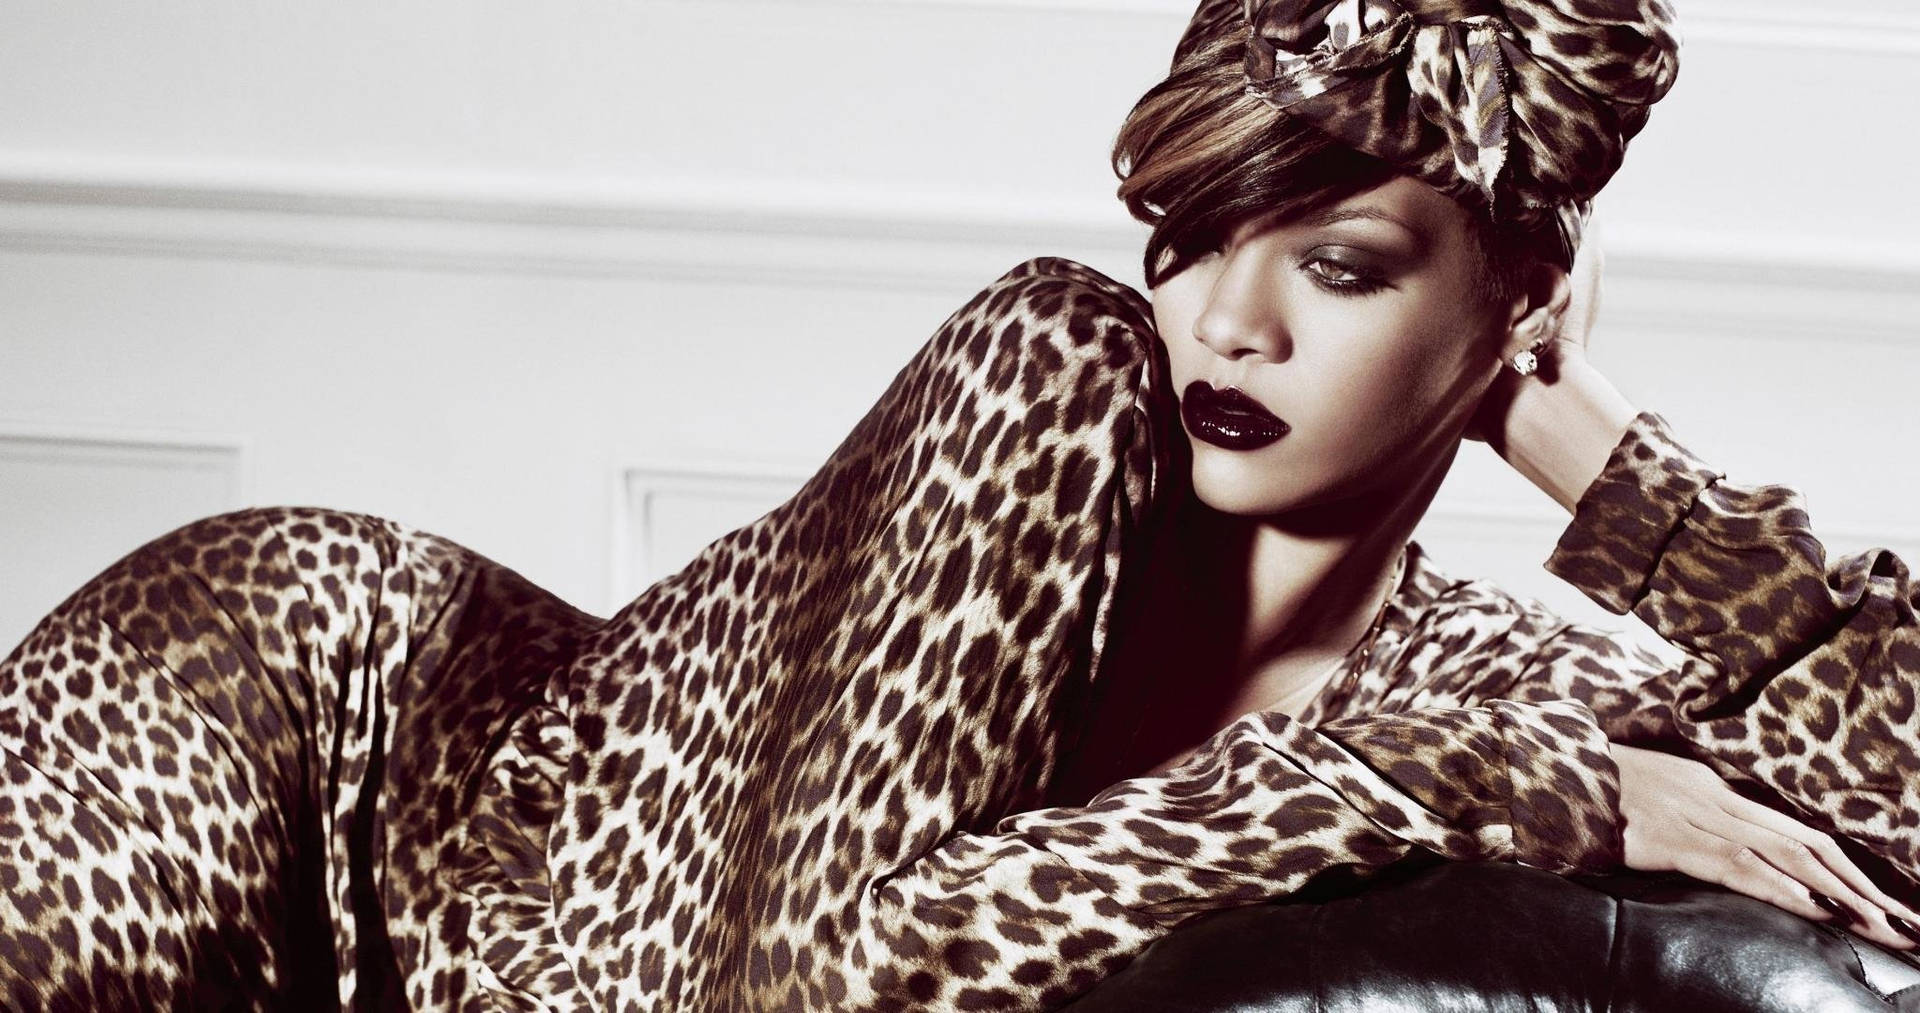 Rihanna Struts Her Stuff In A Fierce Leopard Print Outfit Background